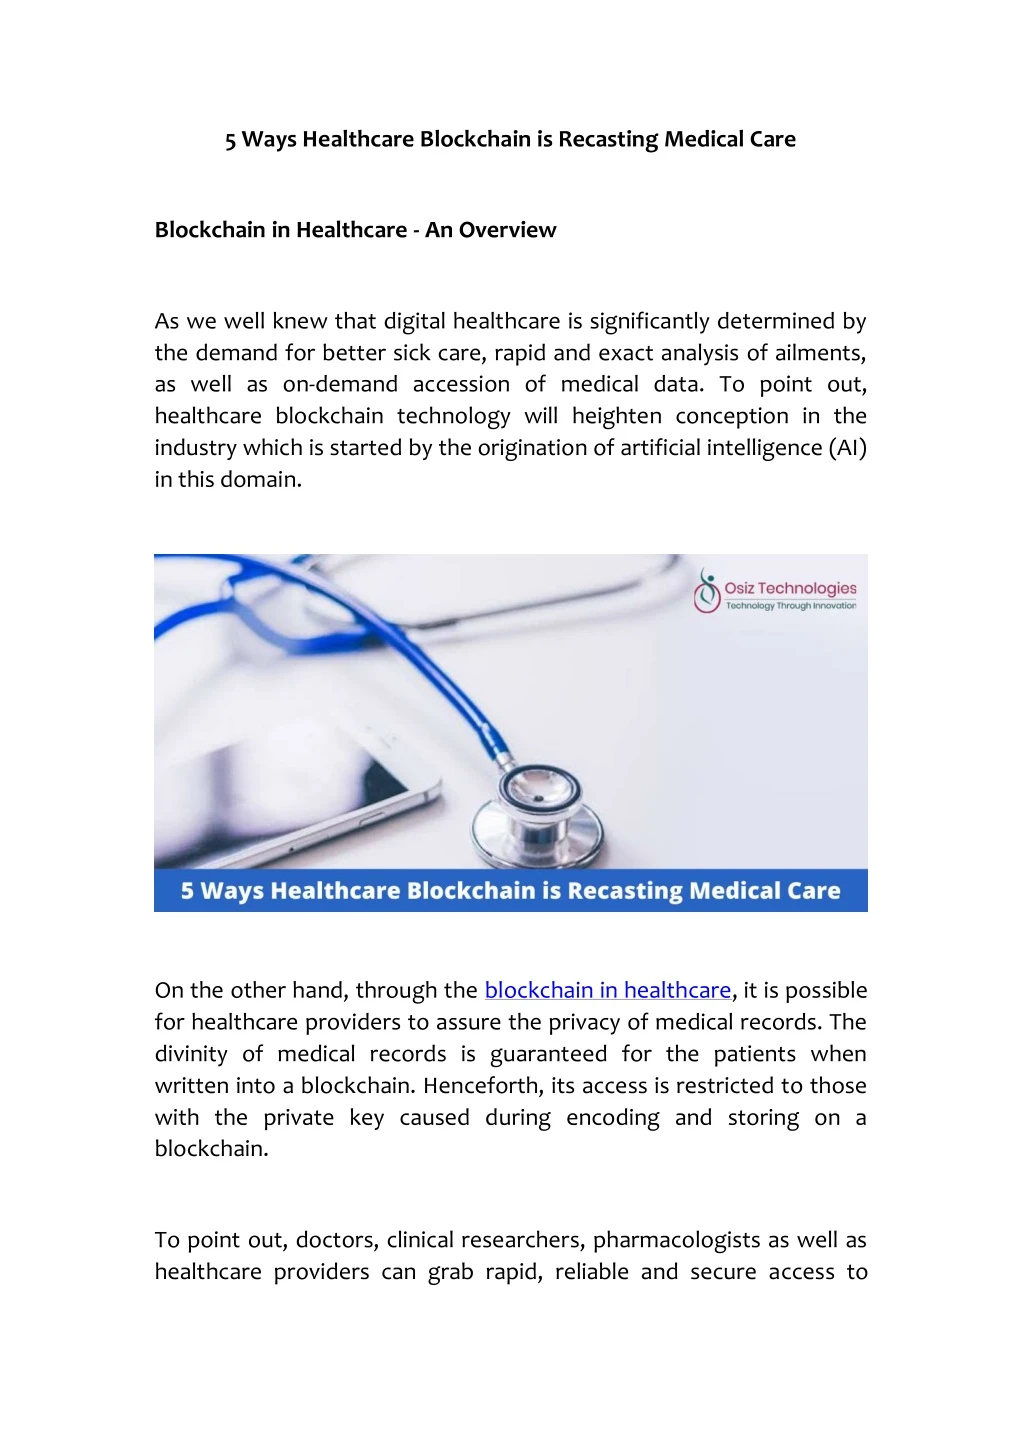 5 ways healthcare blockchain is recasting medical